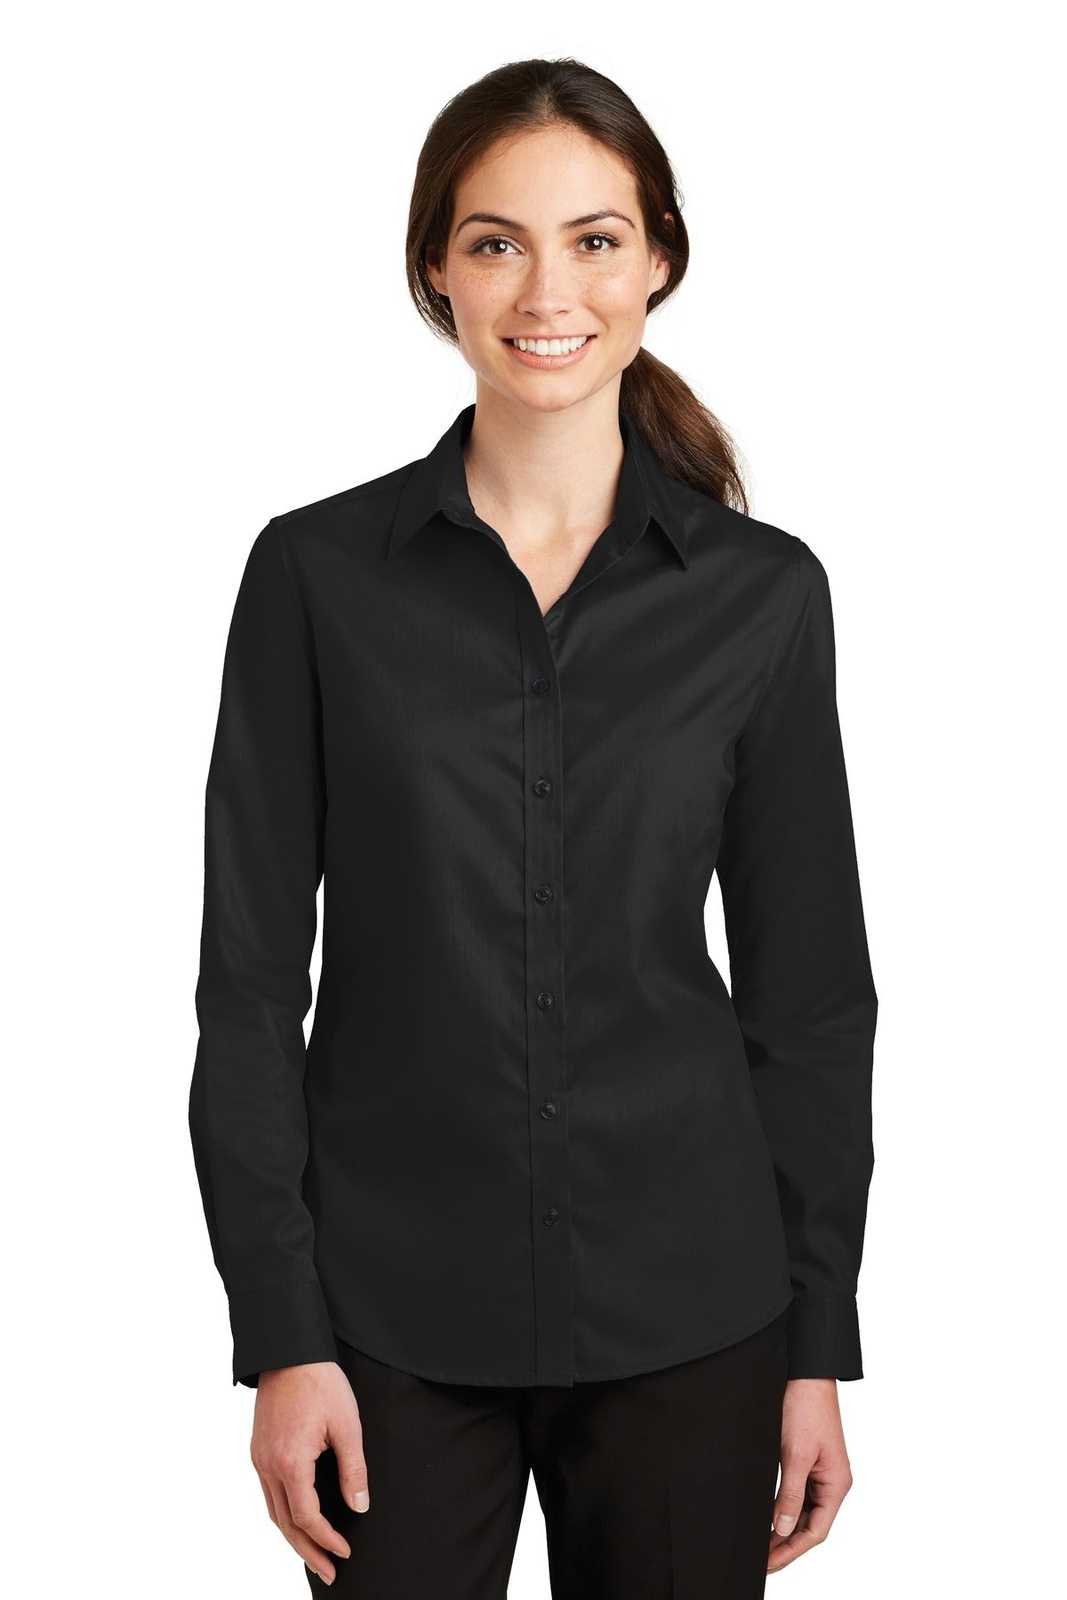 Port Authority L663 Ladies Superpro Twill Shirt - Black - HIT a Double - 1